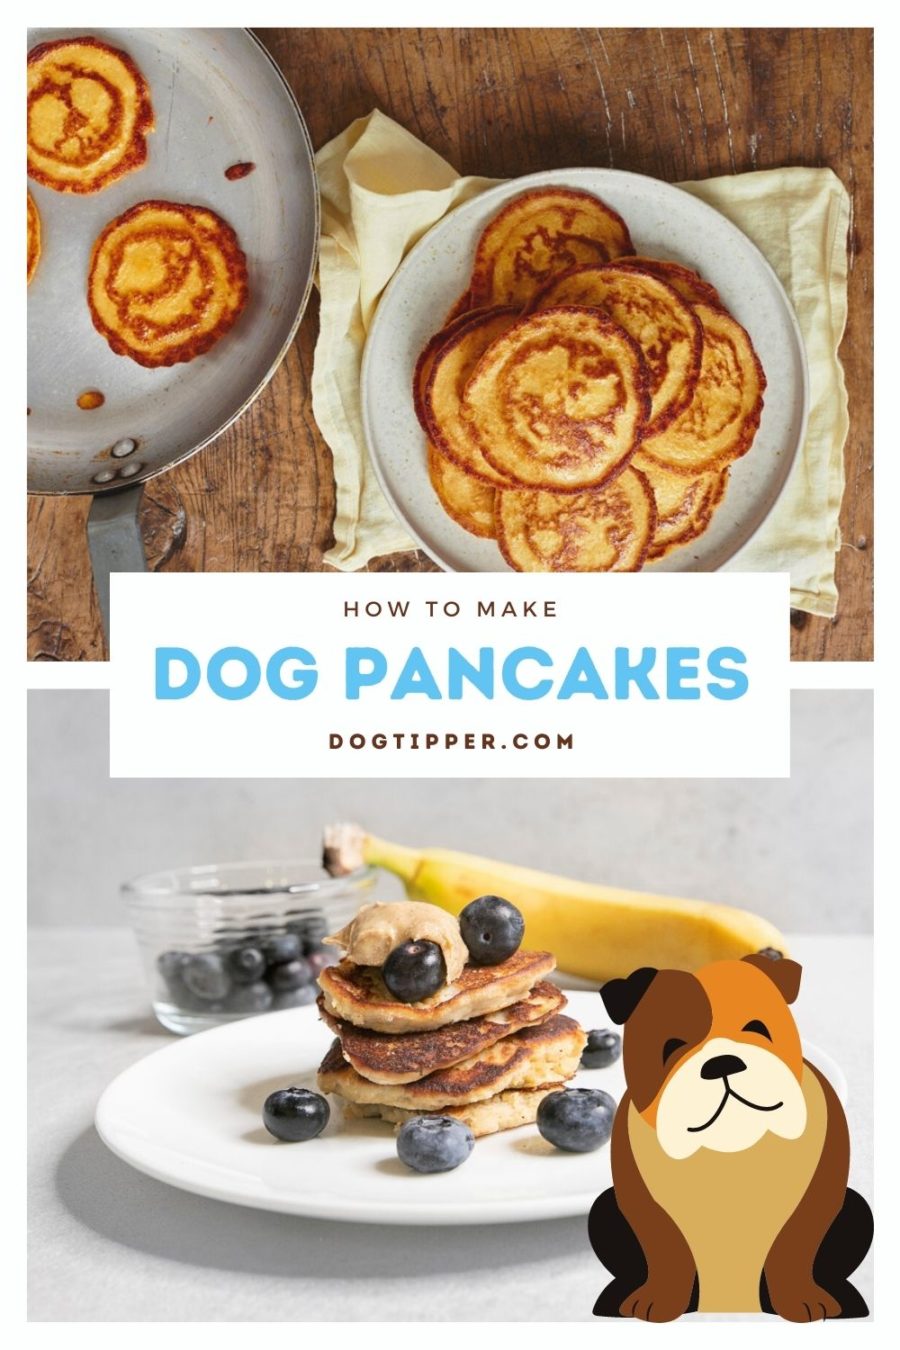 How to Make Dog Pancakes - 2 Recipes!